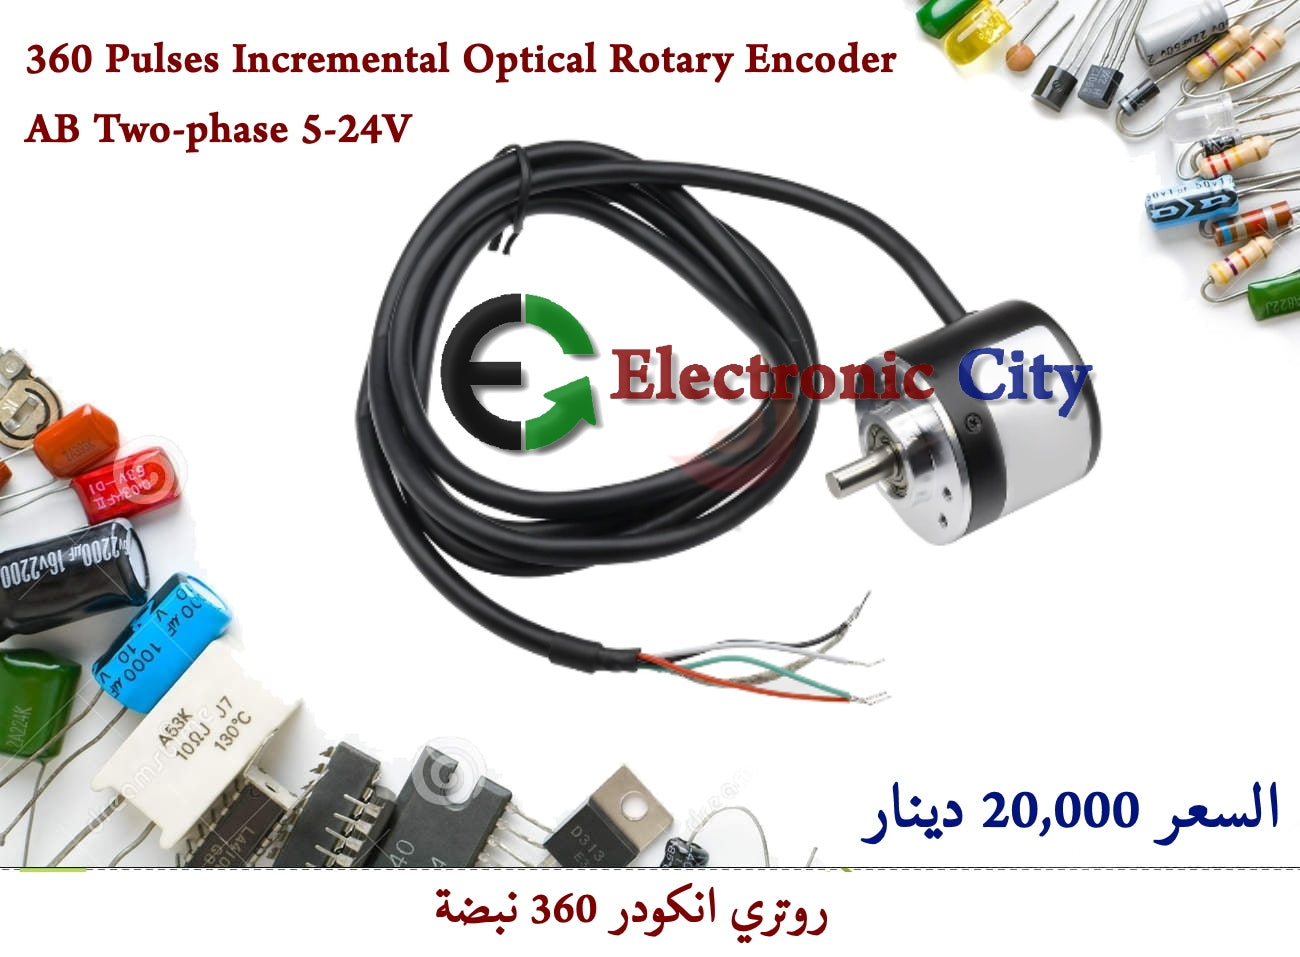 360 Pulses Incremental Optical Rotary Encoder AB Two-phase 5-24V #I4 011561